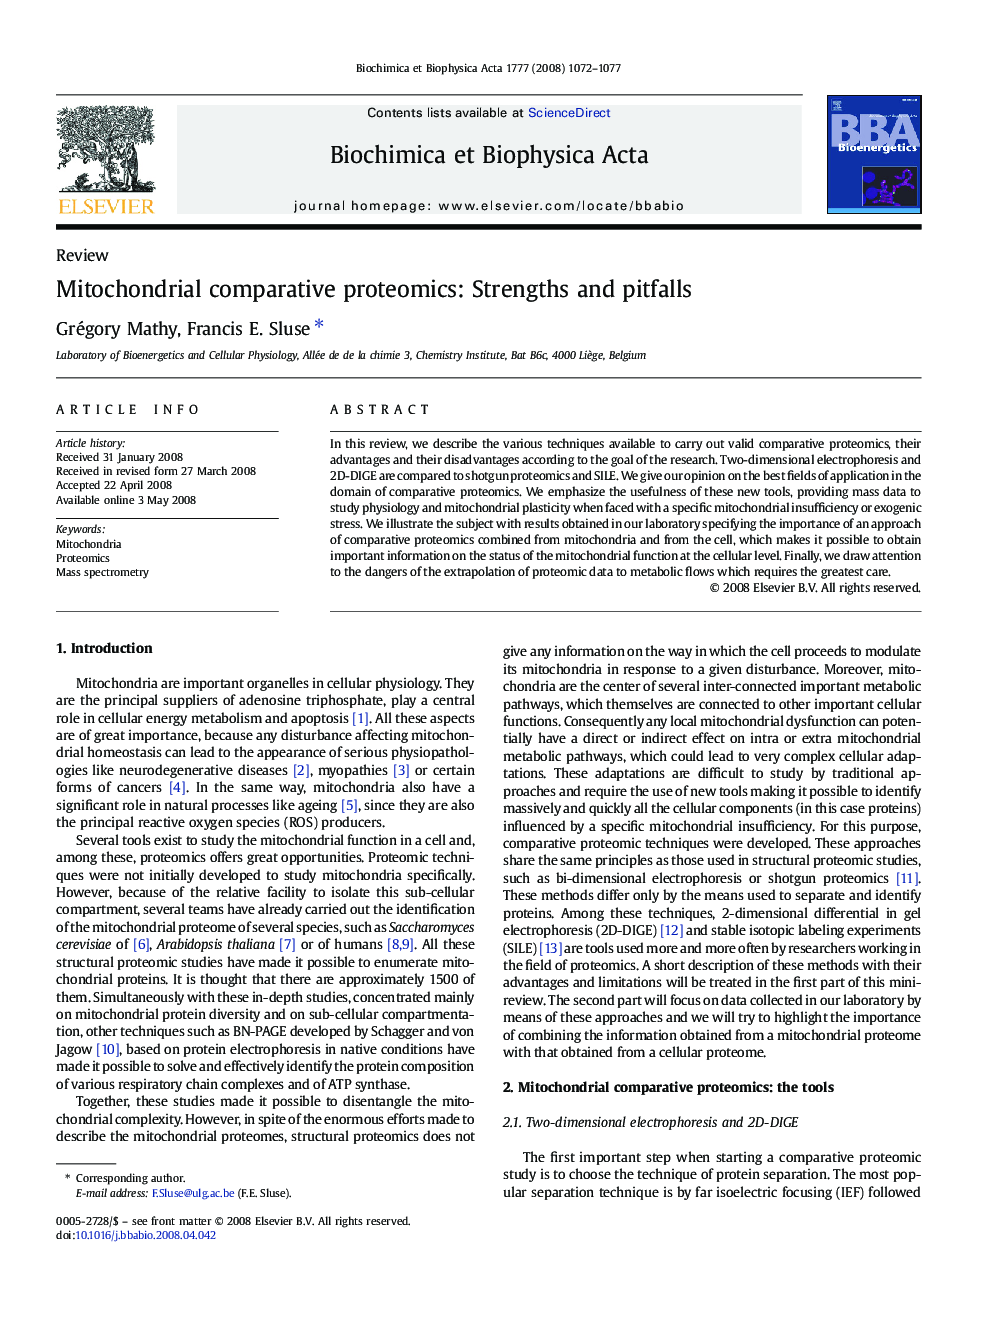 Mitochondrial comparative proteomics: Strengths and pitfalls